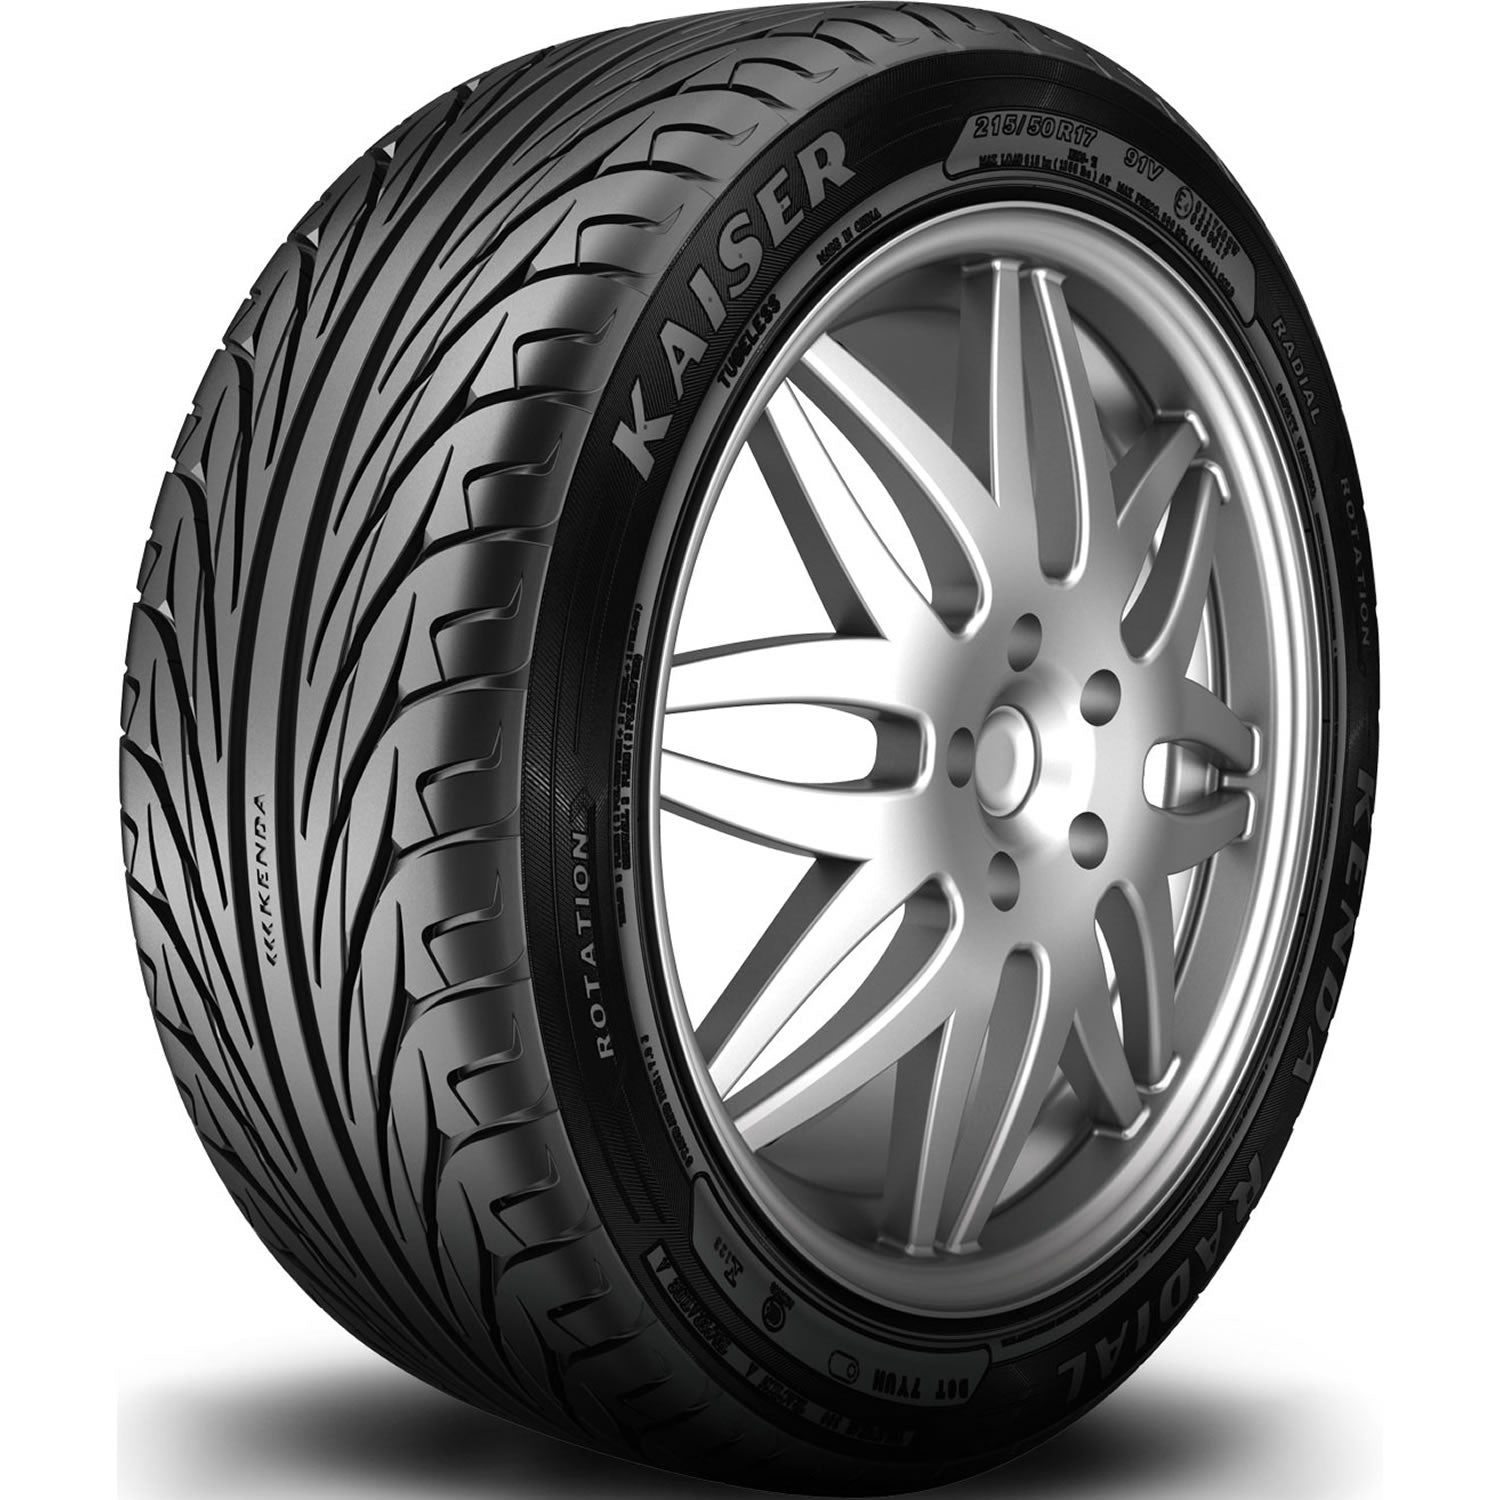 KENDA KAISER 245/45ZR17 (25.7X9.6R 17) Tires